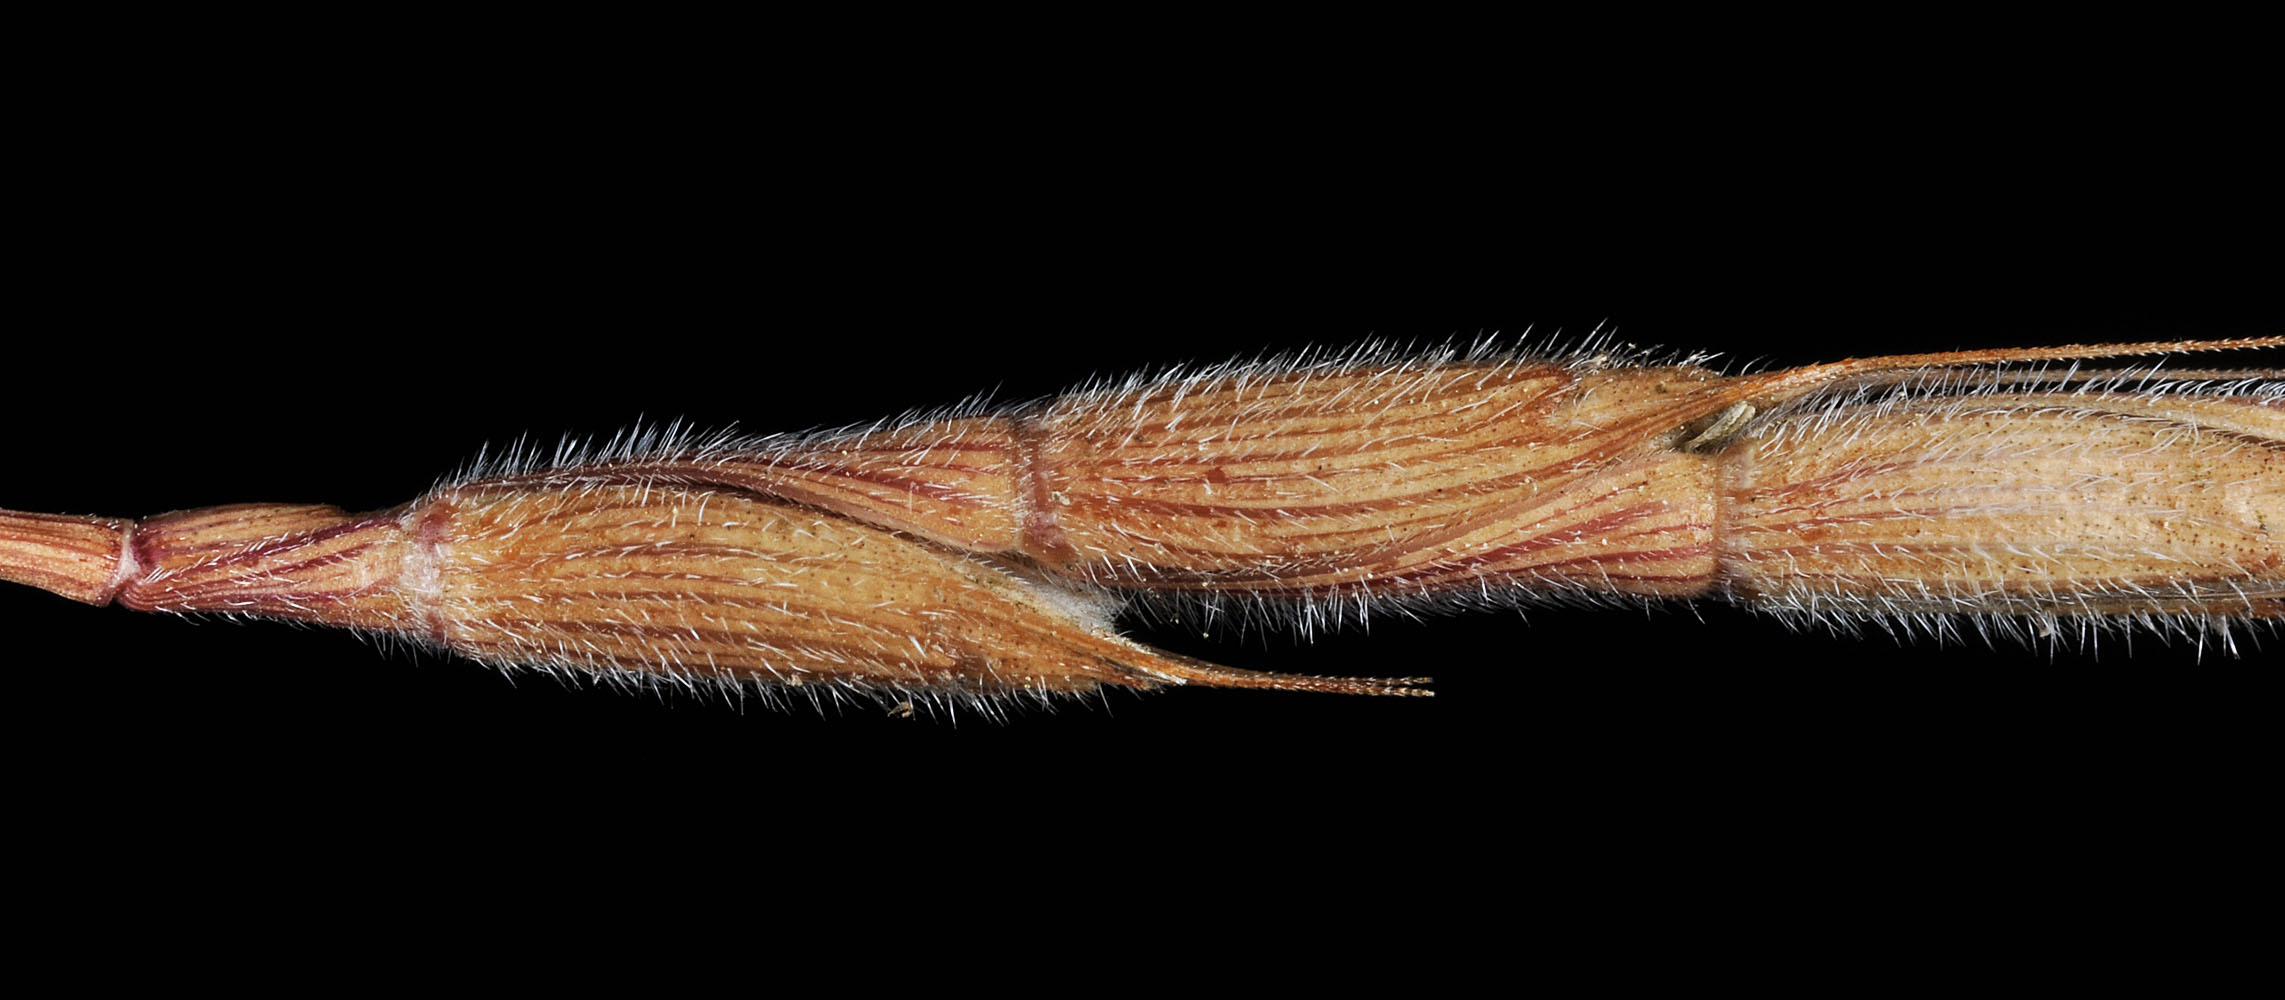 Flora of Eastern Washington Image: Aegilops cylindrica